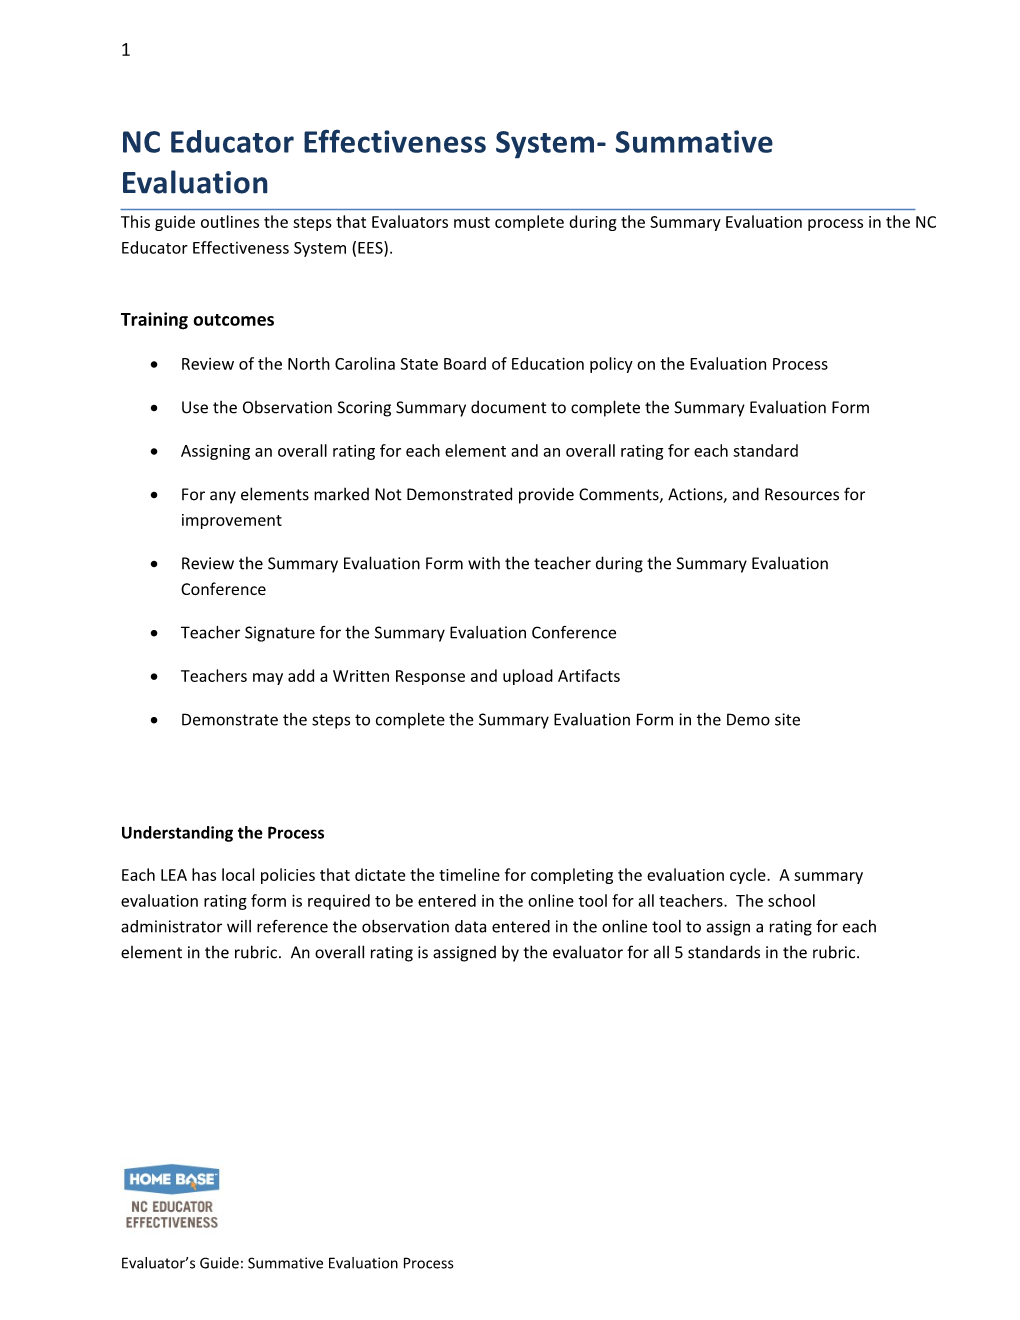 NC Educator Effectiveness System- Summative Evaluation